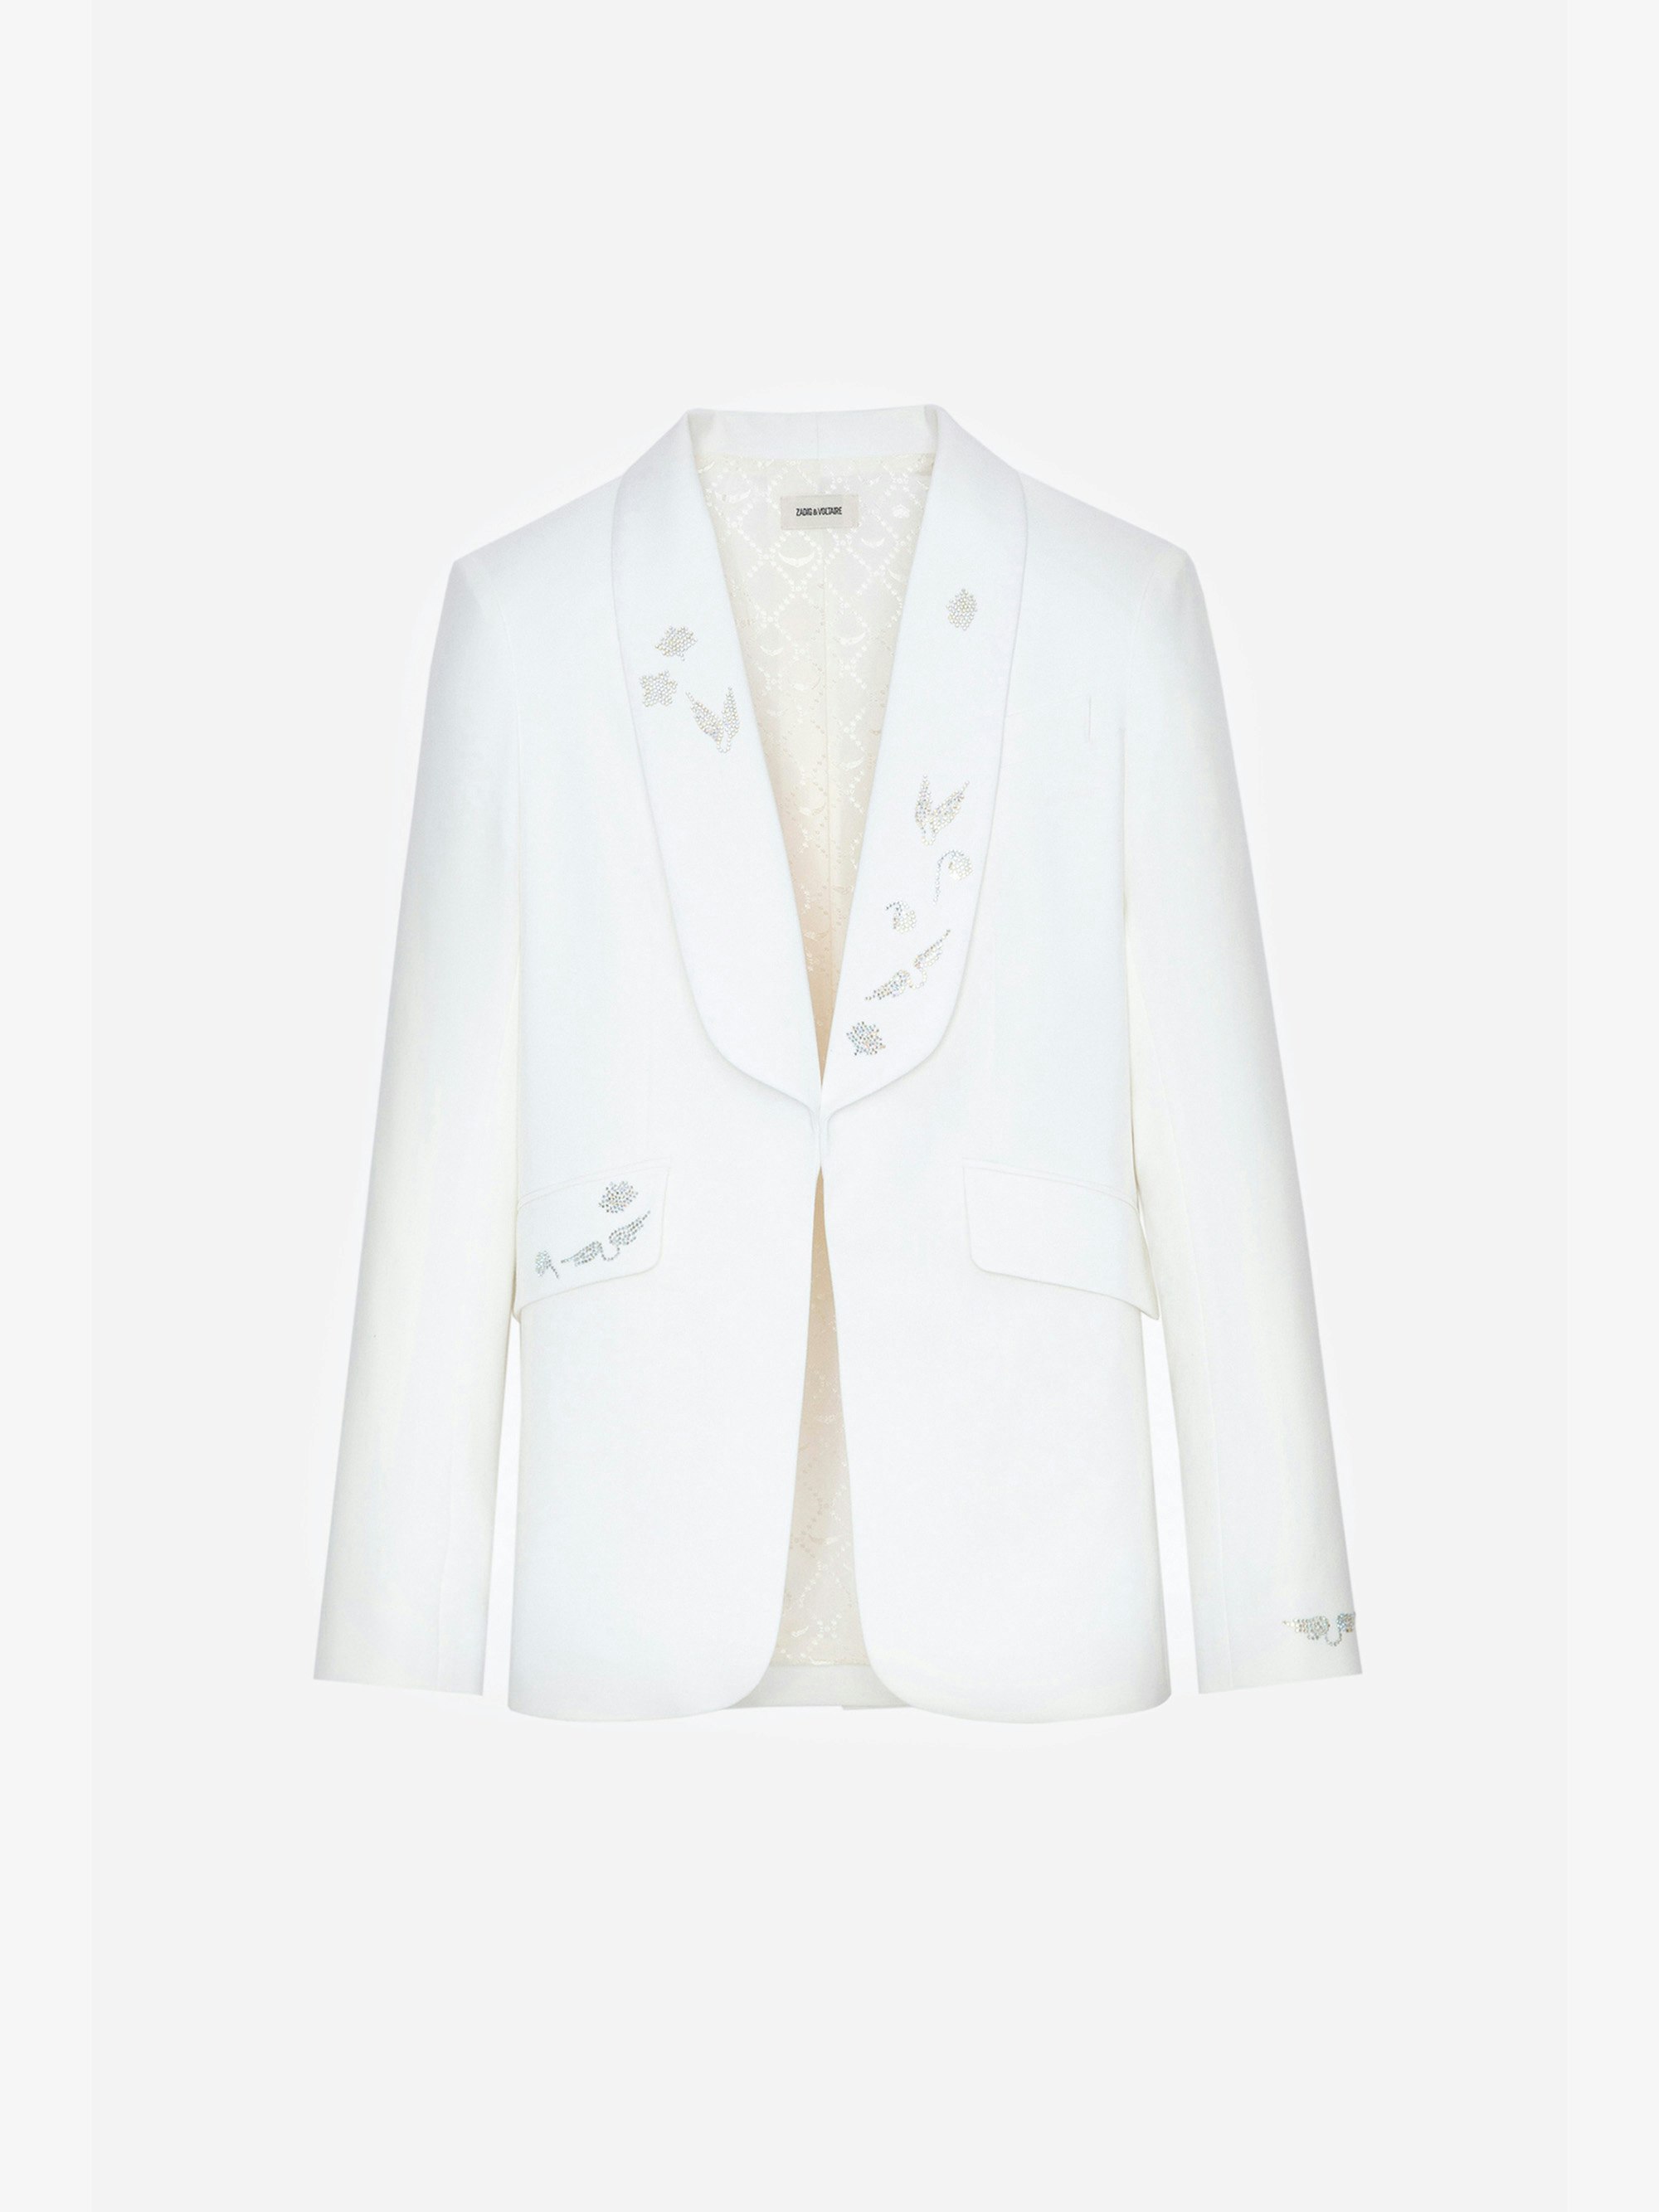 Blazer Date Strass - Veste blazer blanc à col rond et orné d'ailes en strass.